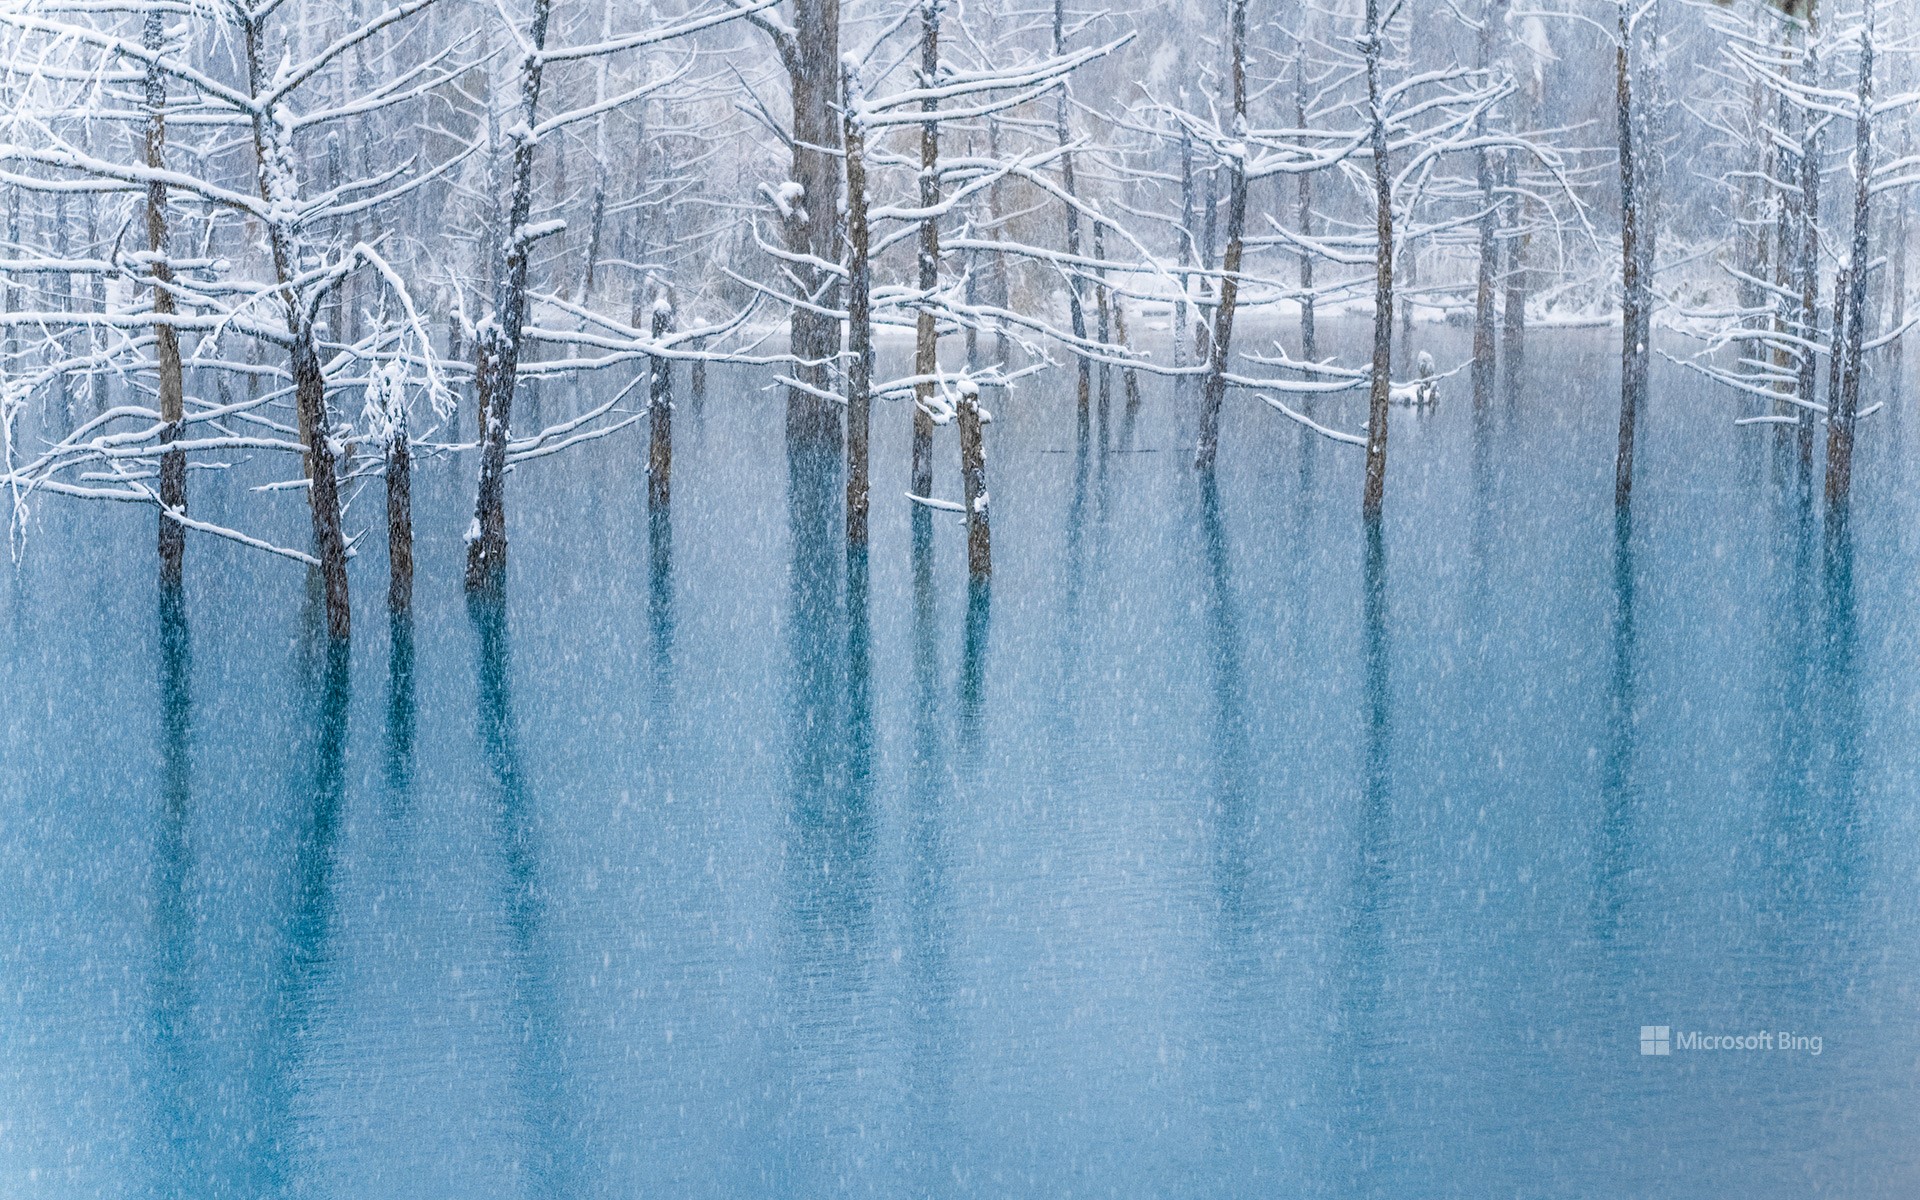 Blue Pond, Hokkaido